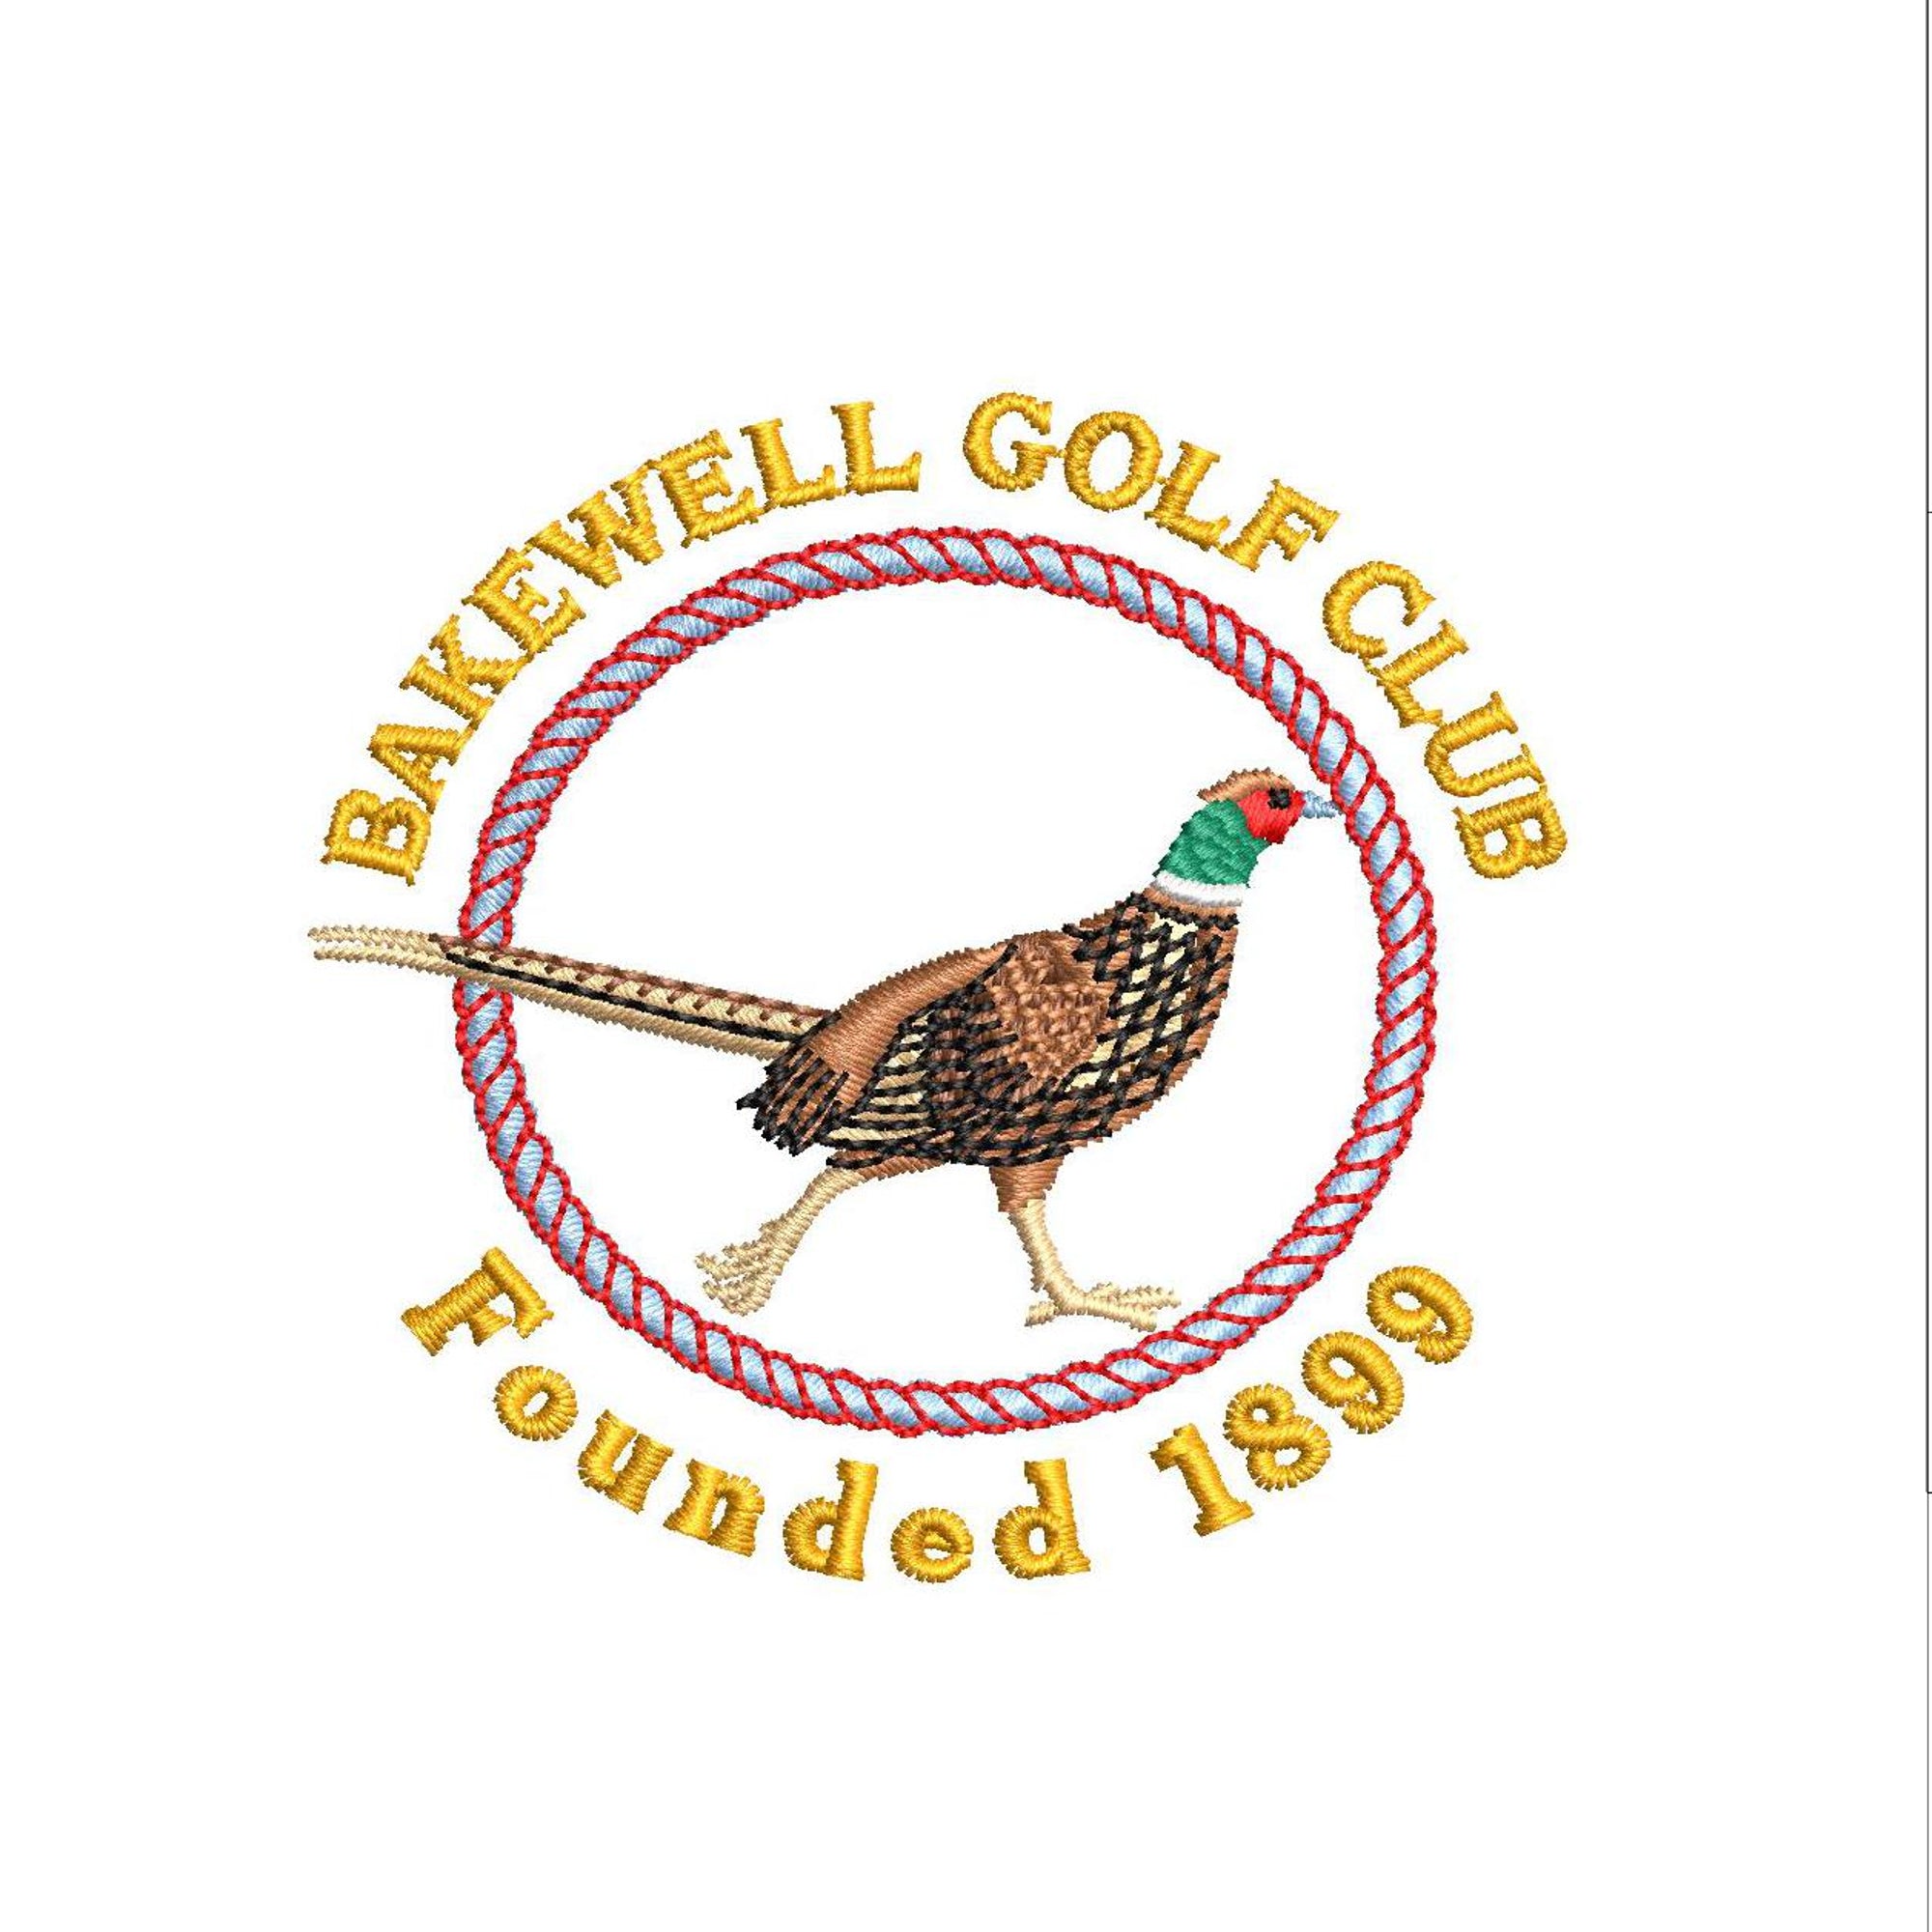 Bakewell Golf Club